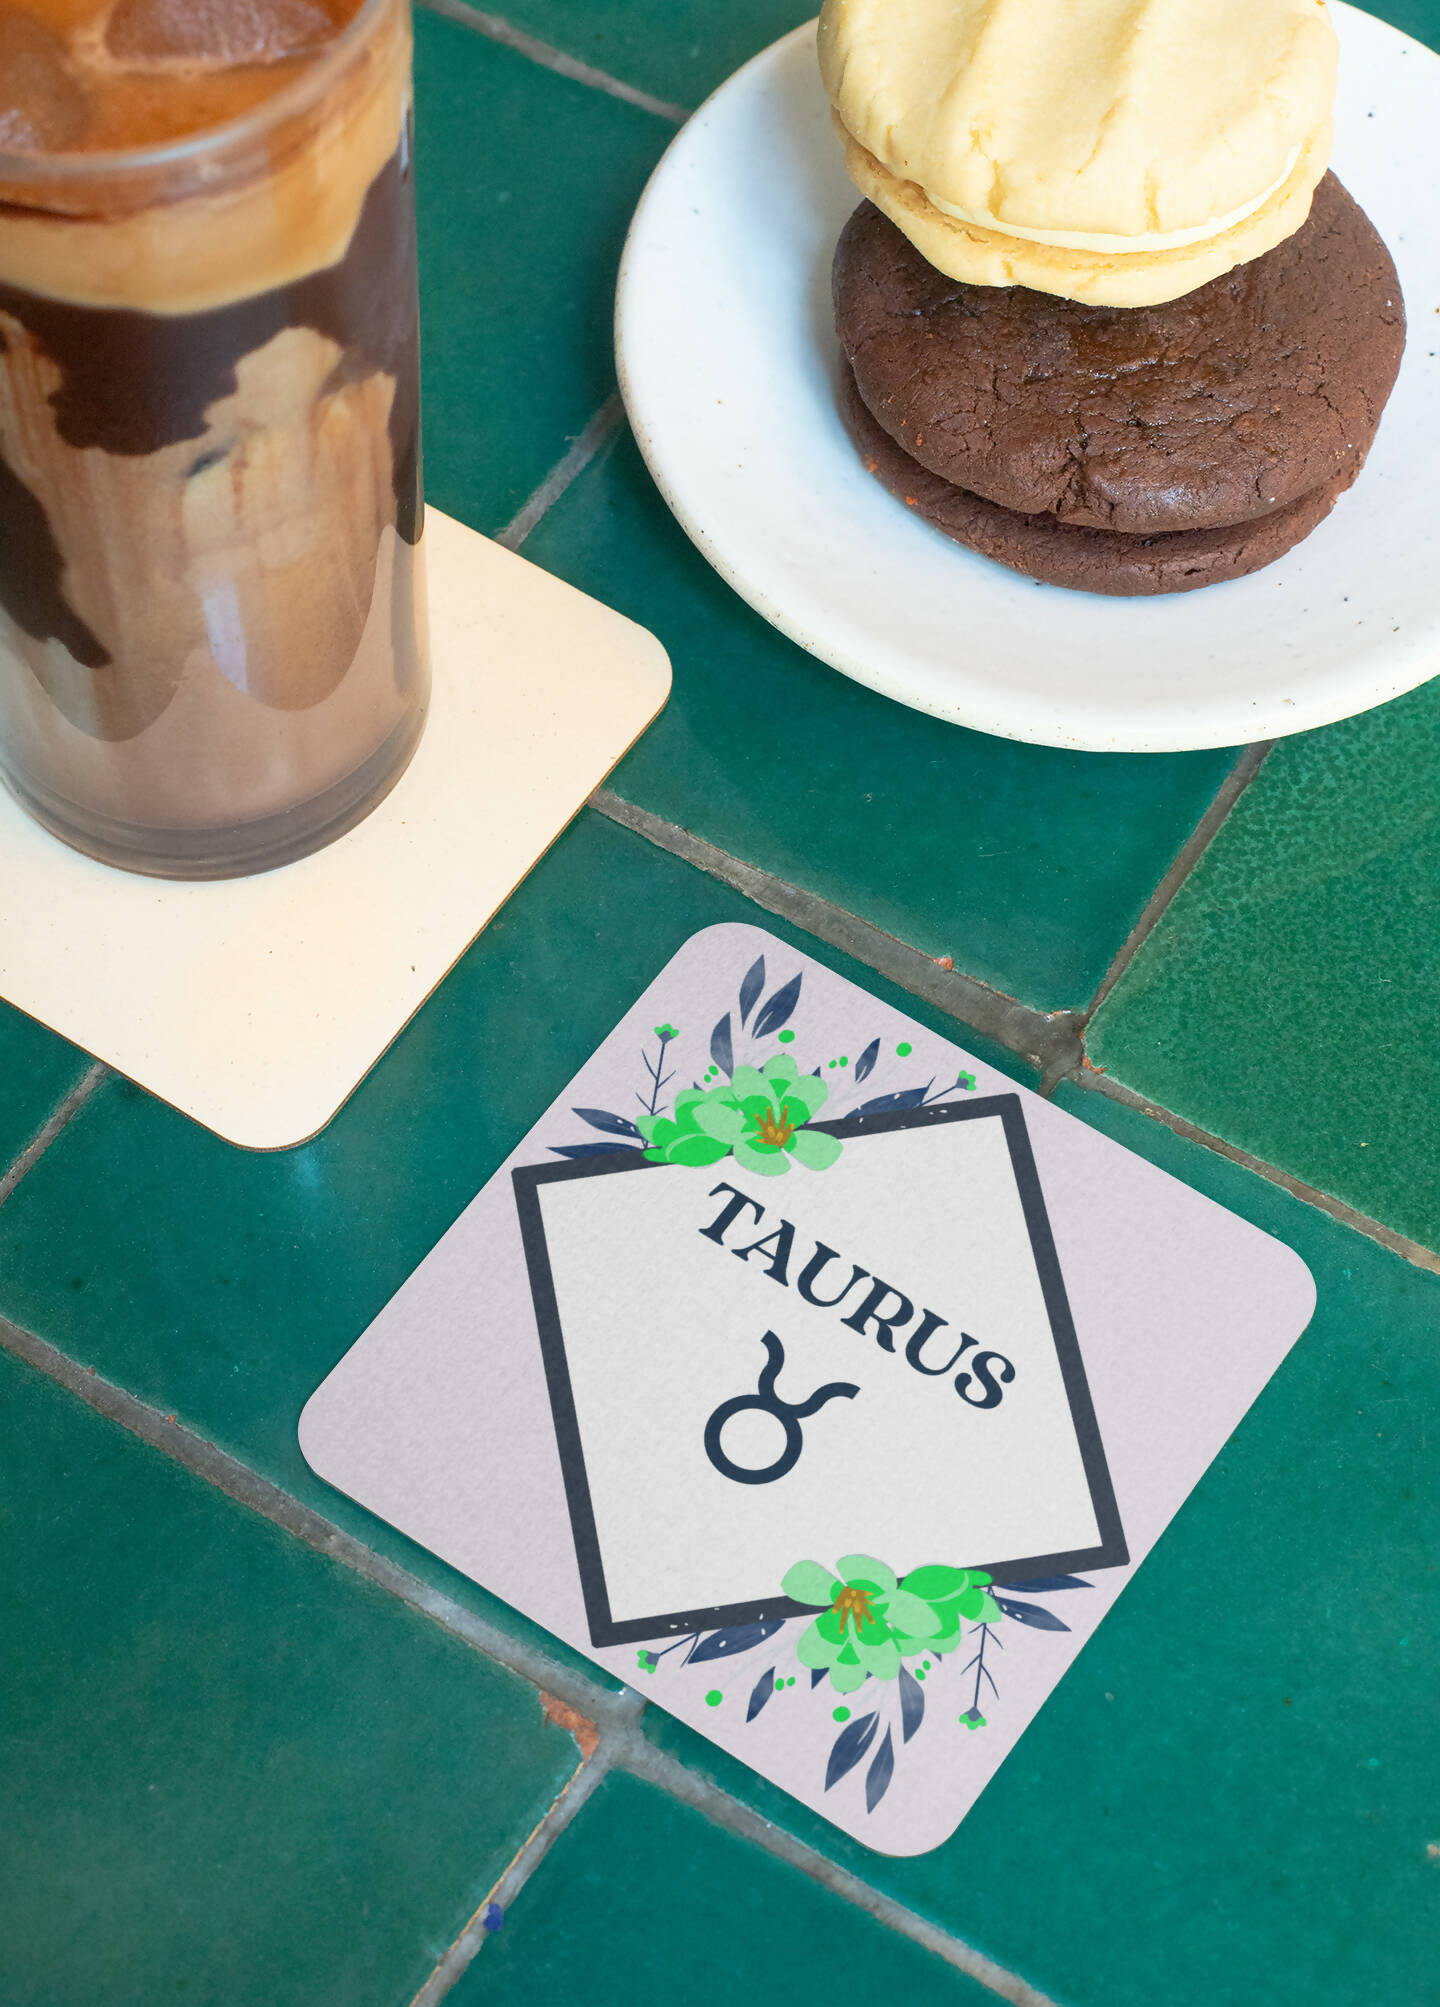 Taurus 11oz Floral Mug & Coaster Set